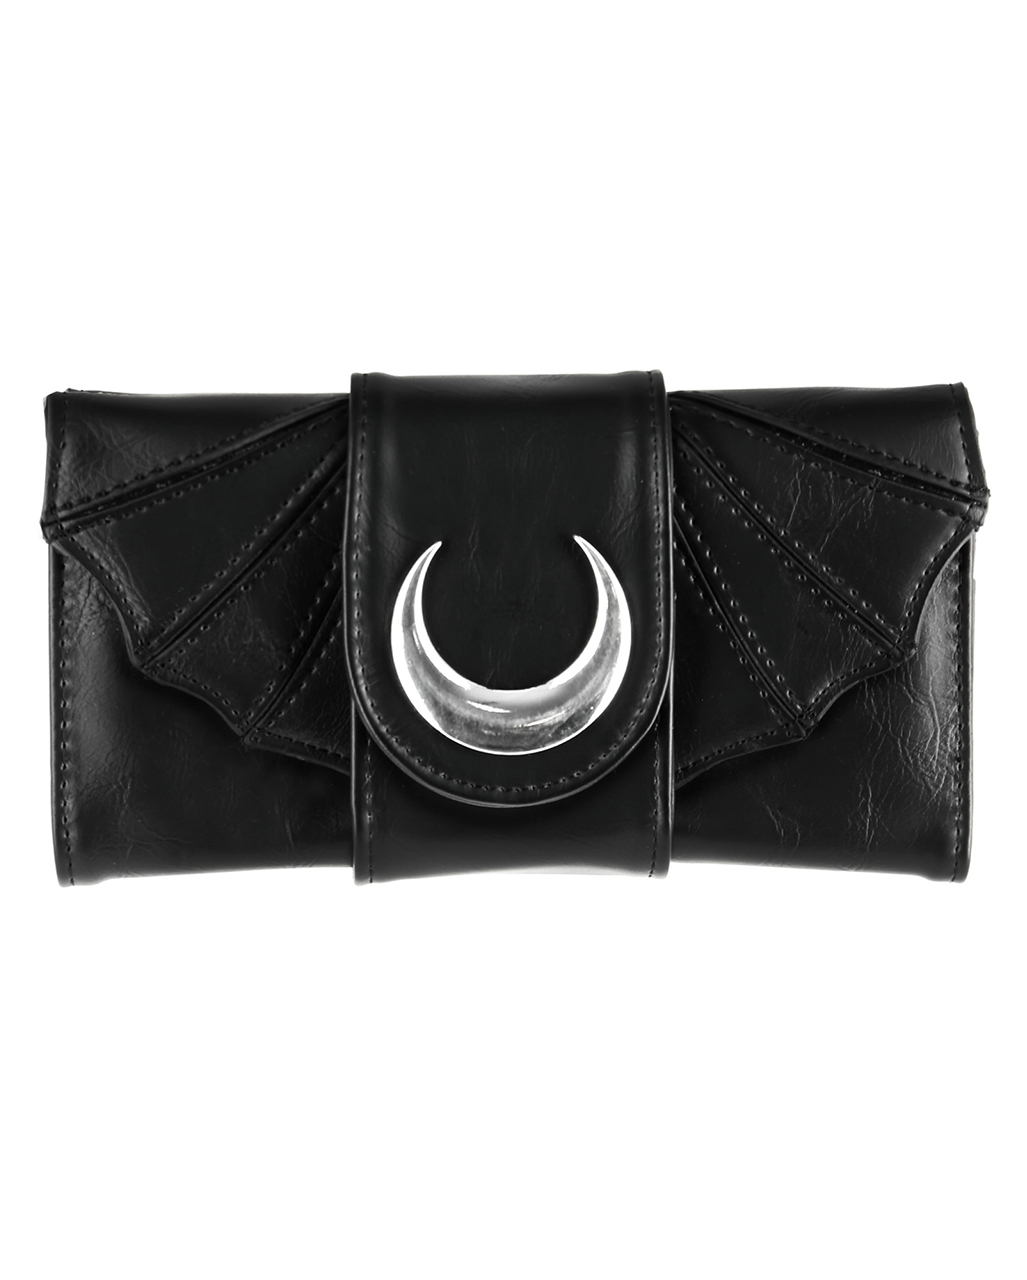 moon gothic geldboerse mit fledermausfluegel moon gothic purse with bat wings 53771 01